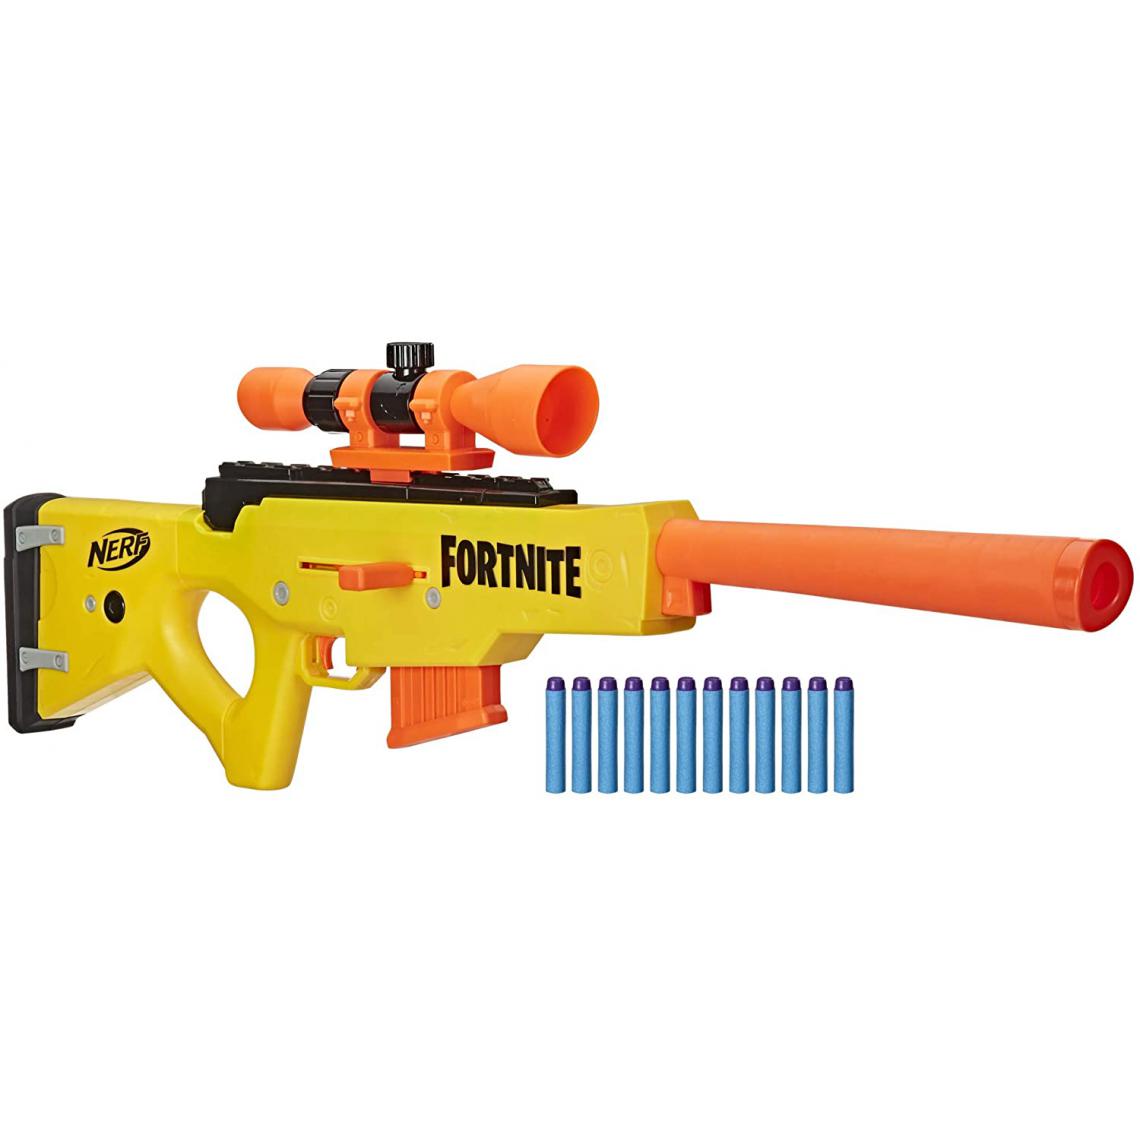 Nerf - pistolet et flechettes Nerf Fortnite Officielles jaune orange - Jeux d'adresse